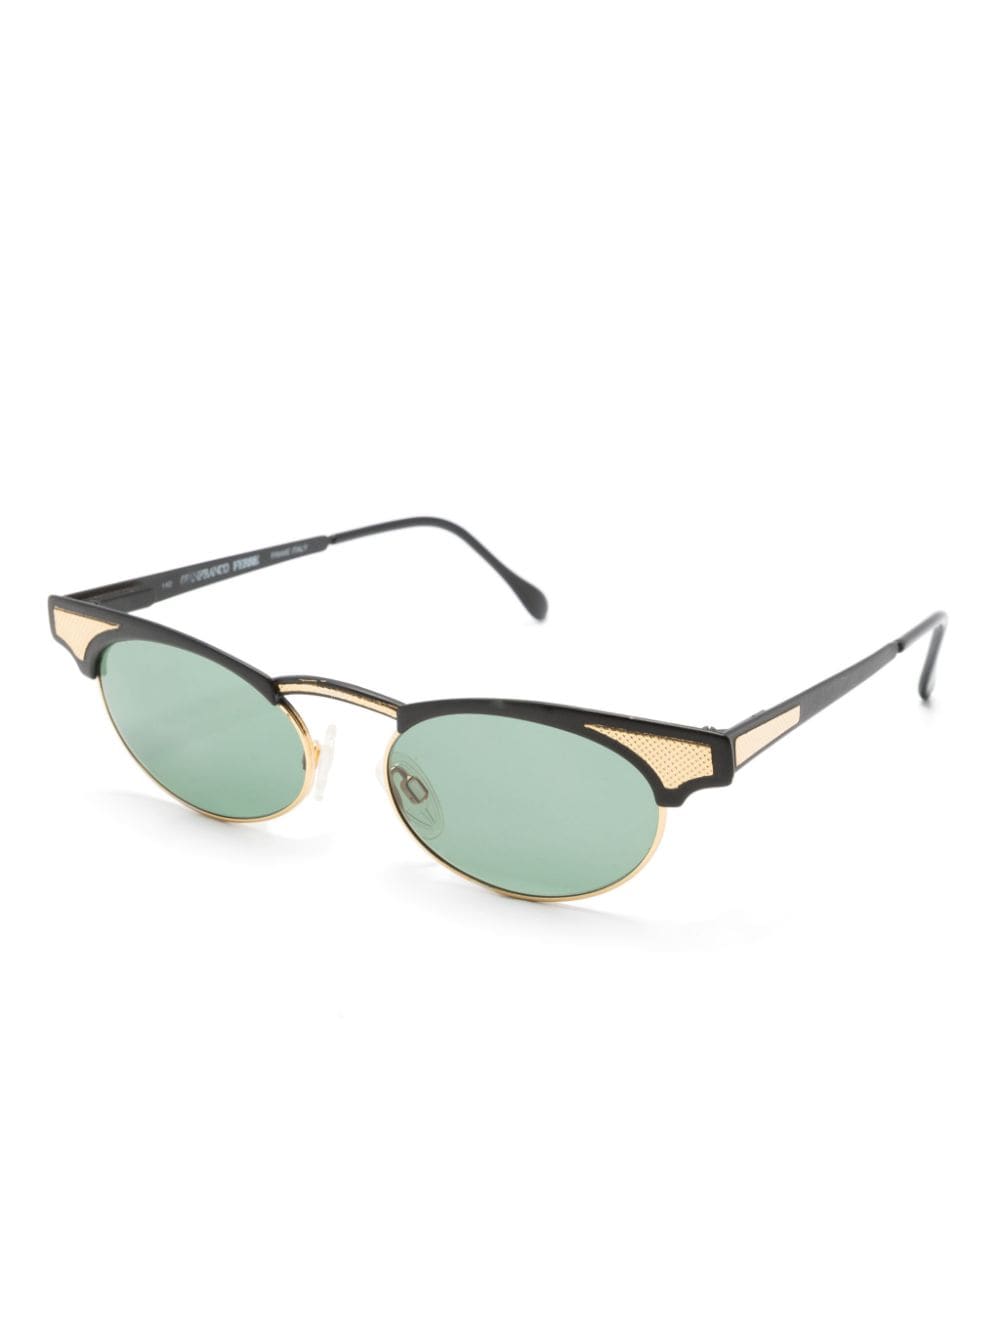 Gianfranco Ferré Pre-Owned 1980s 86-S cat eye sunglasses - Zwart